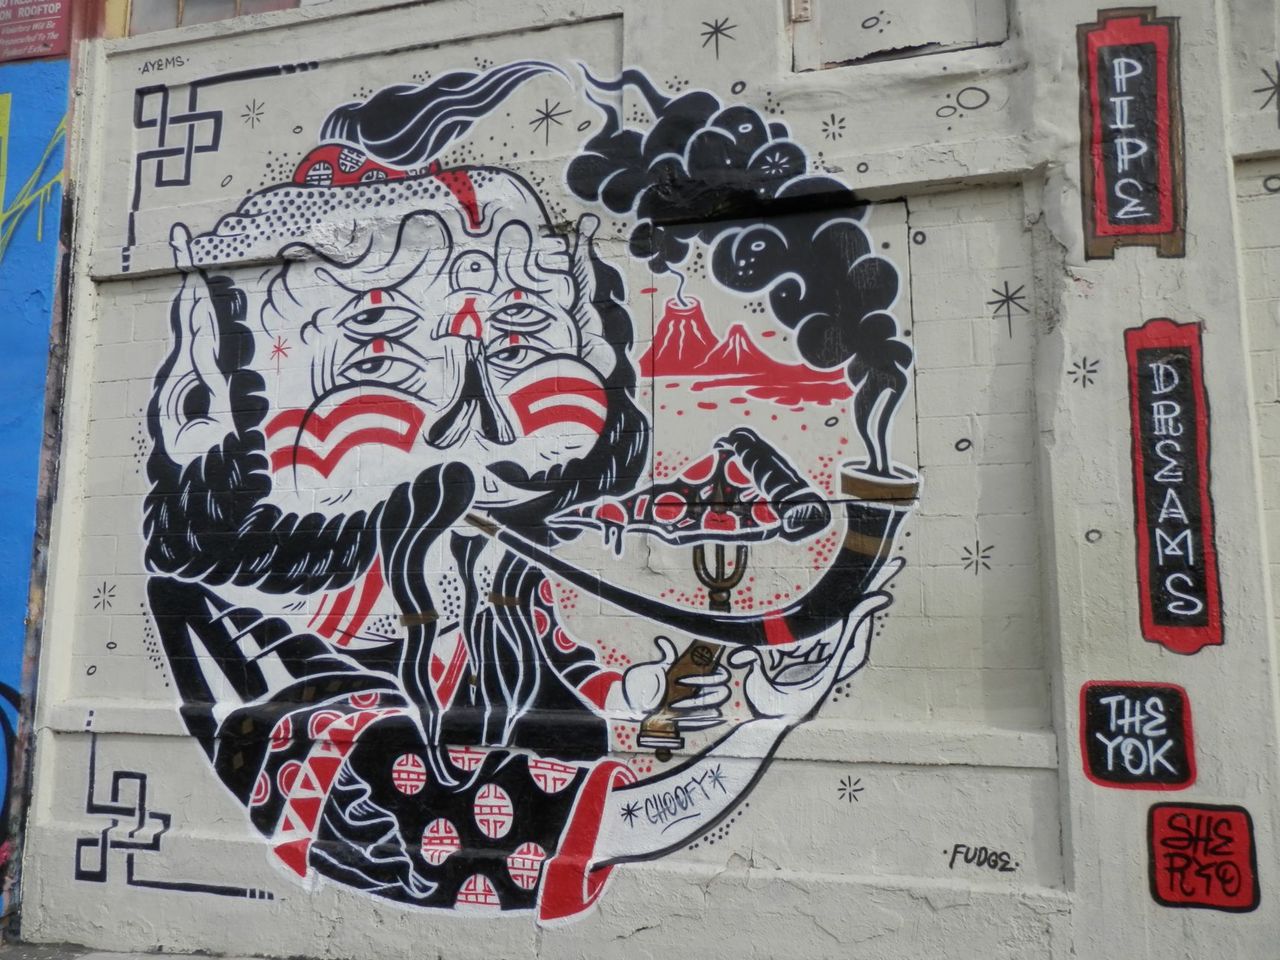 #Streetart #graffiti Pipe Dreams by The Yok & She Ryo at #5pointz in Queens, NY. https://t.co/FEJcOcu1cu